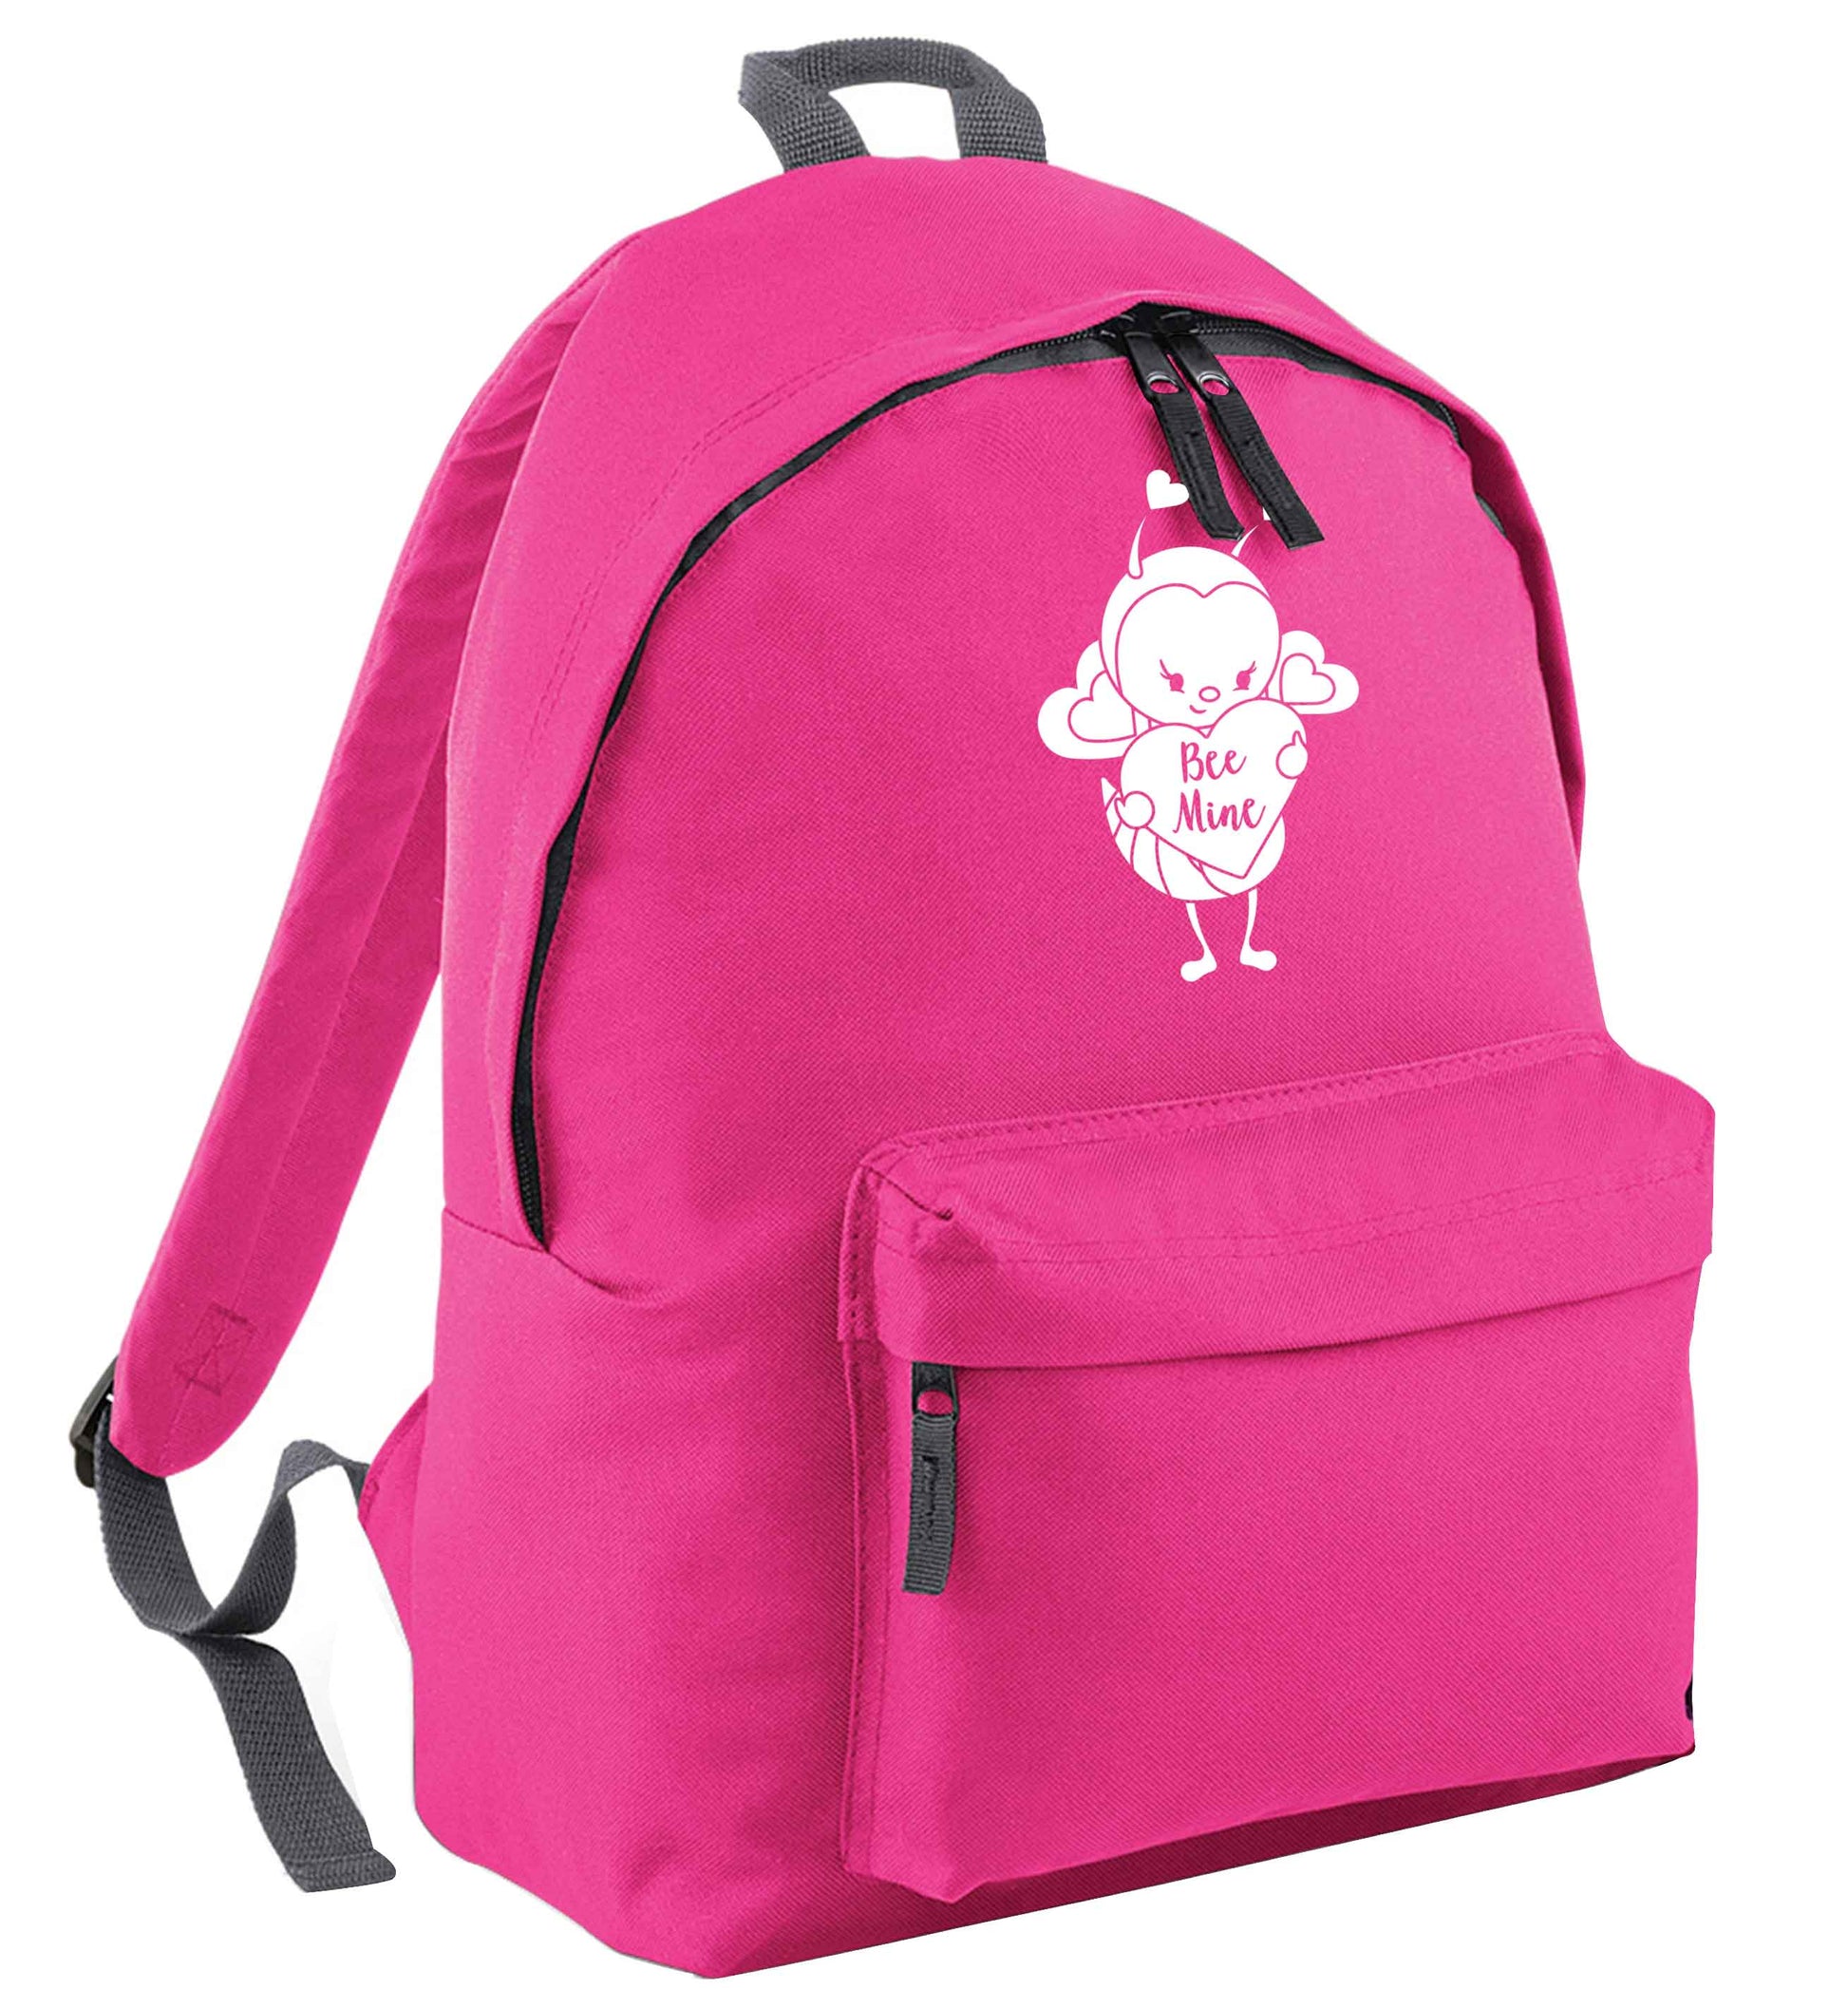 Bee mine | Children's backpack